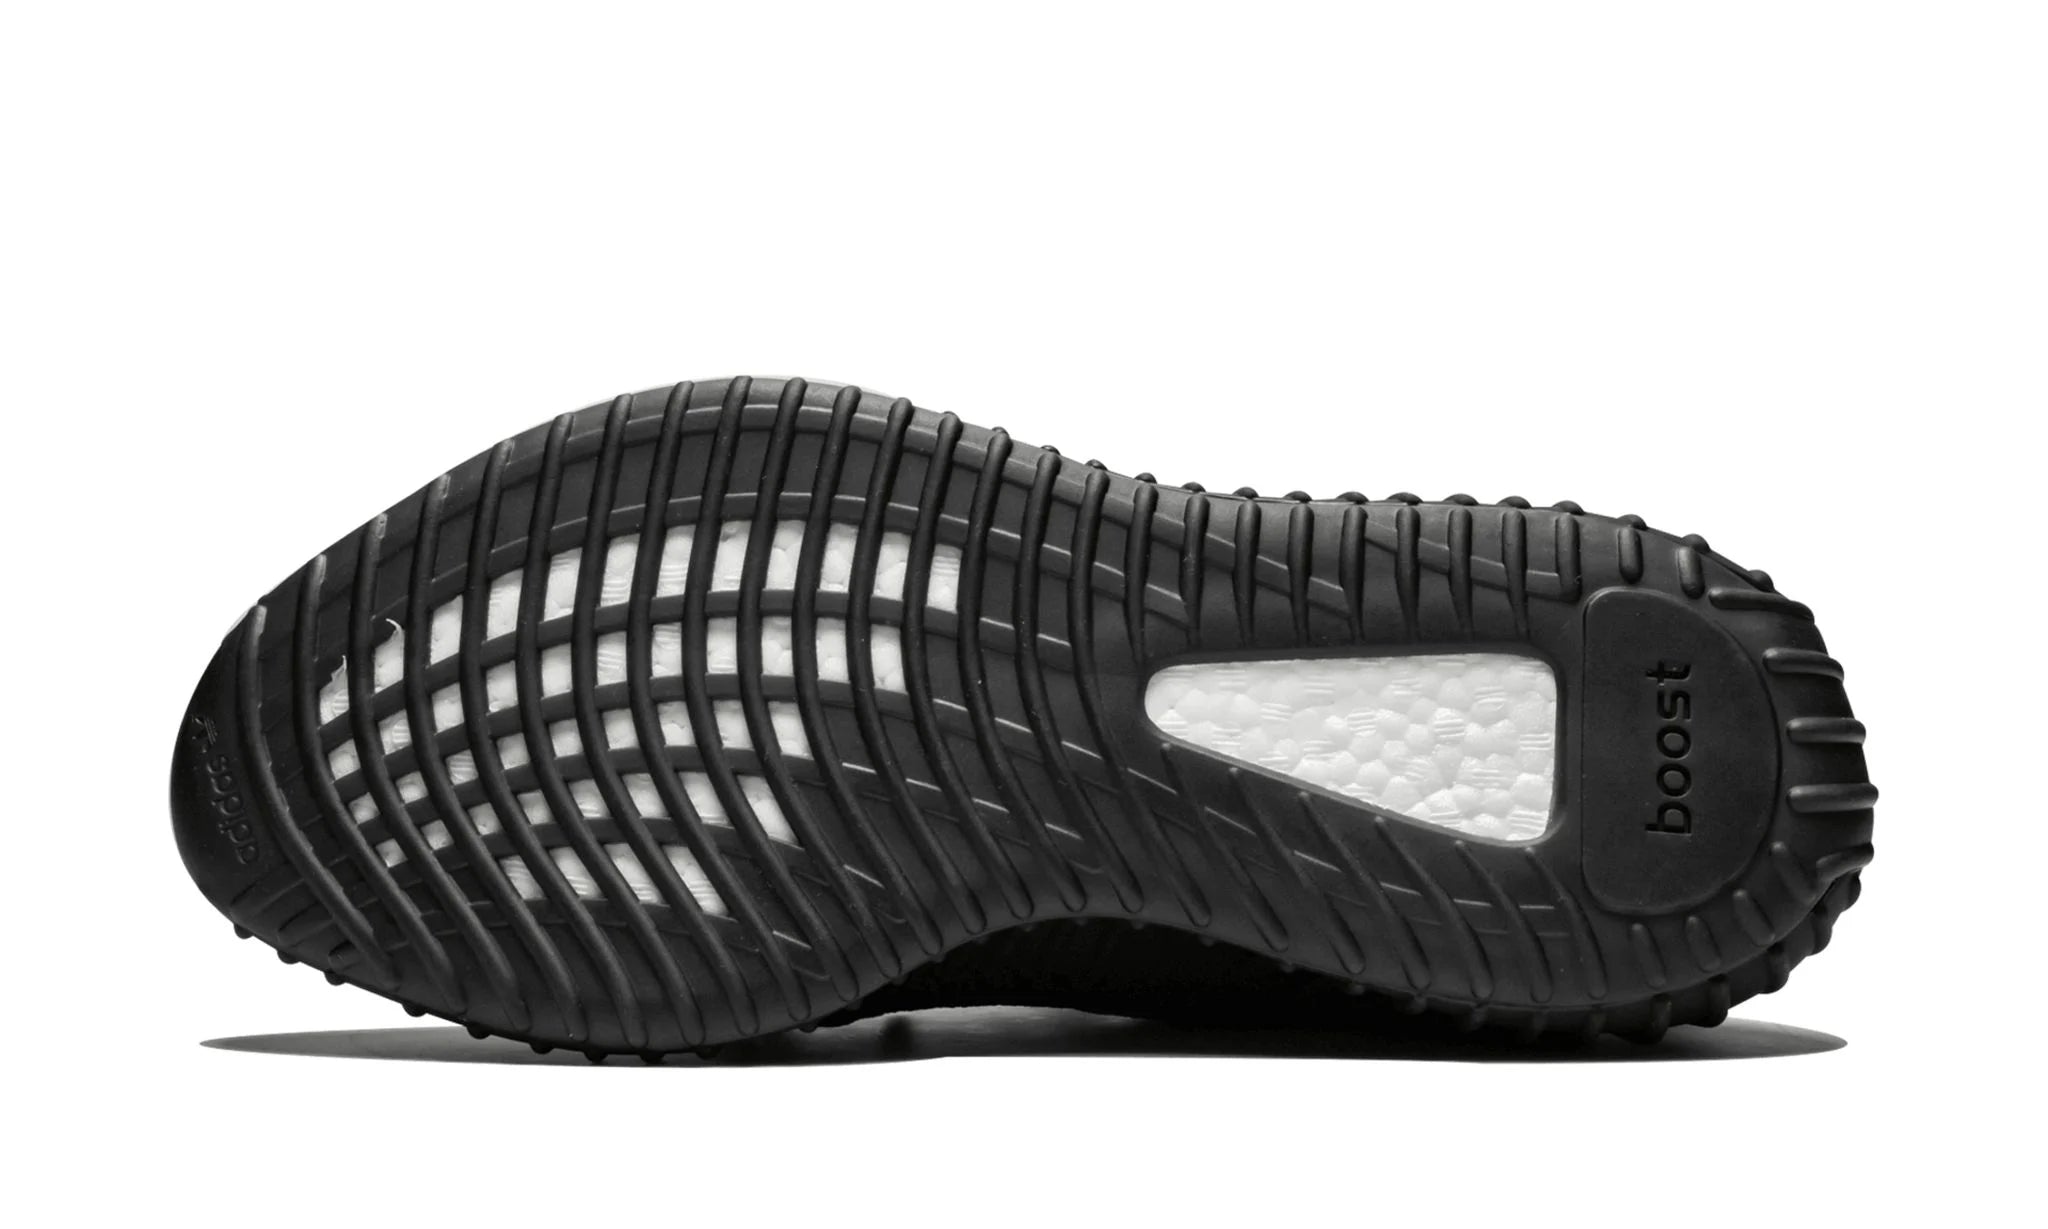 Adidas Yeezy Boost 350 V2 Black (Non-Reflective) - Yeezy 350 - Pirri